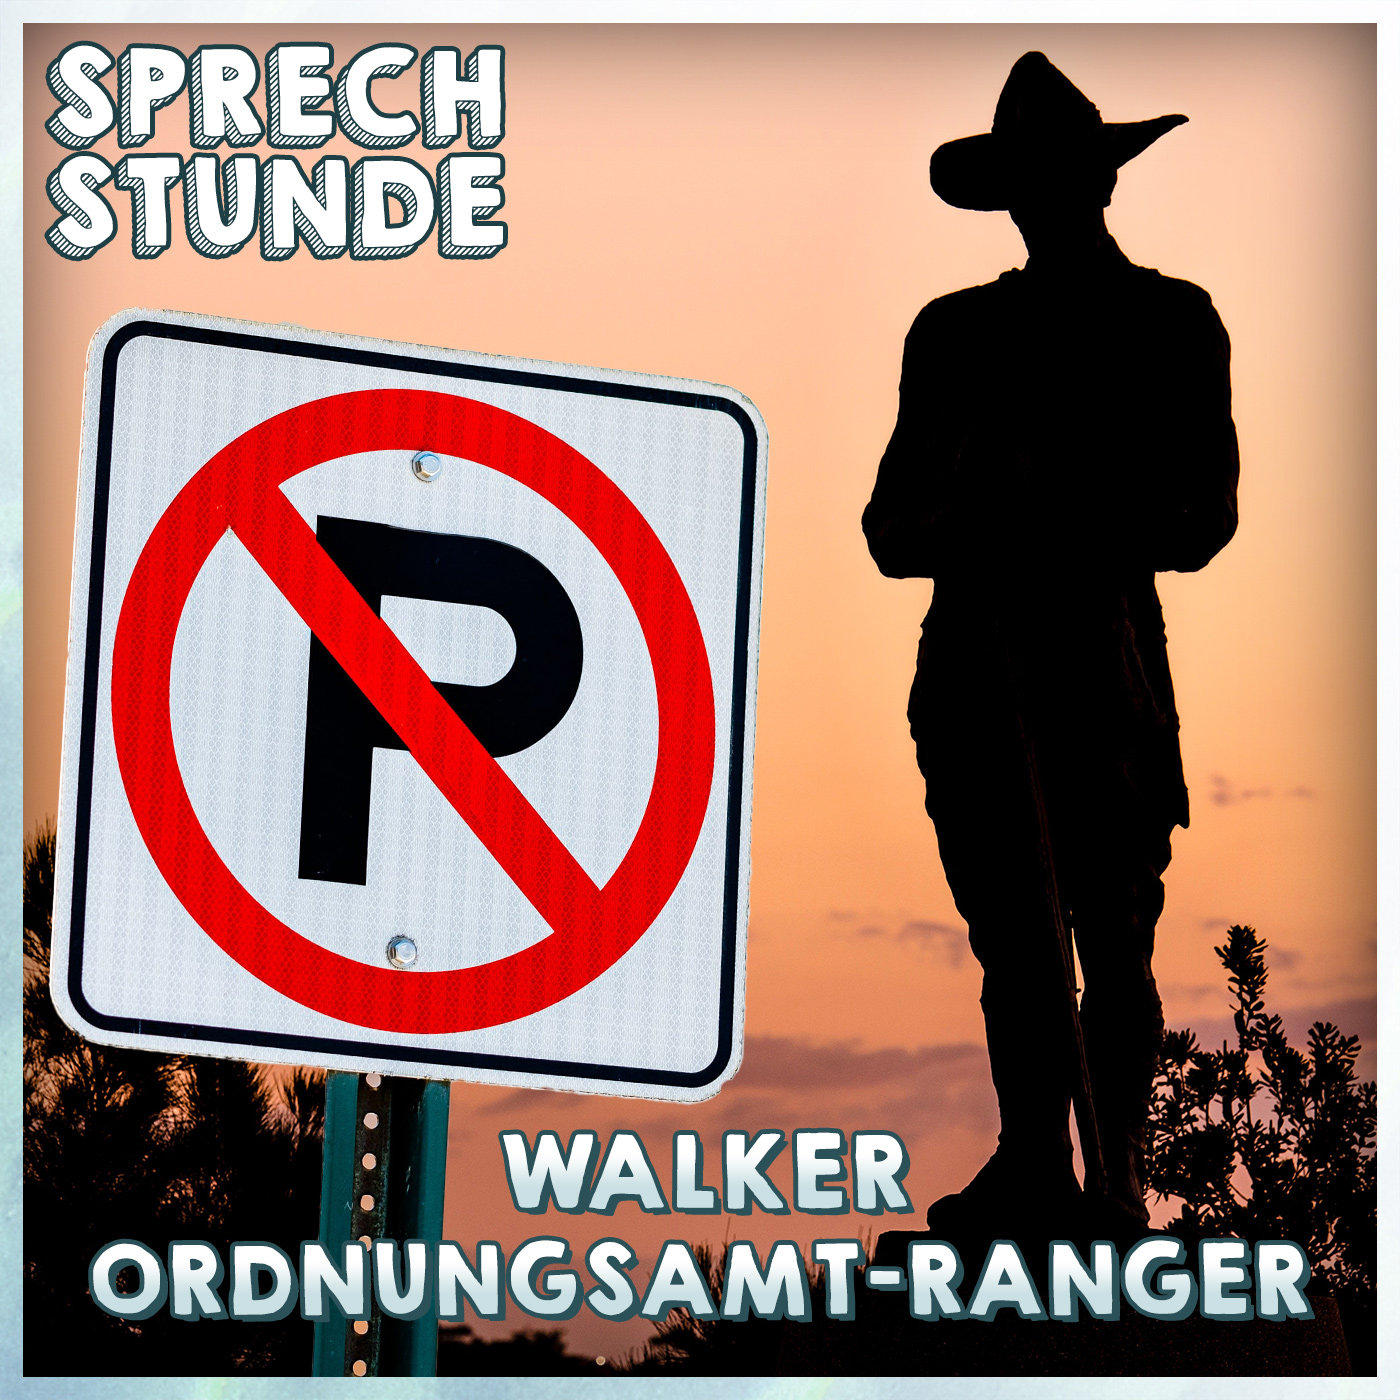 Walker Ordnungsamt-Ranger